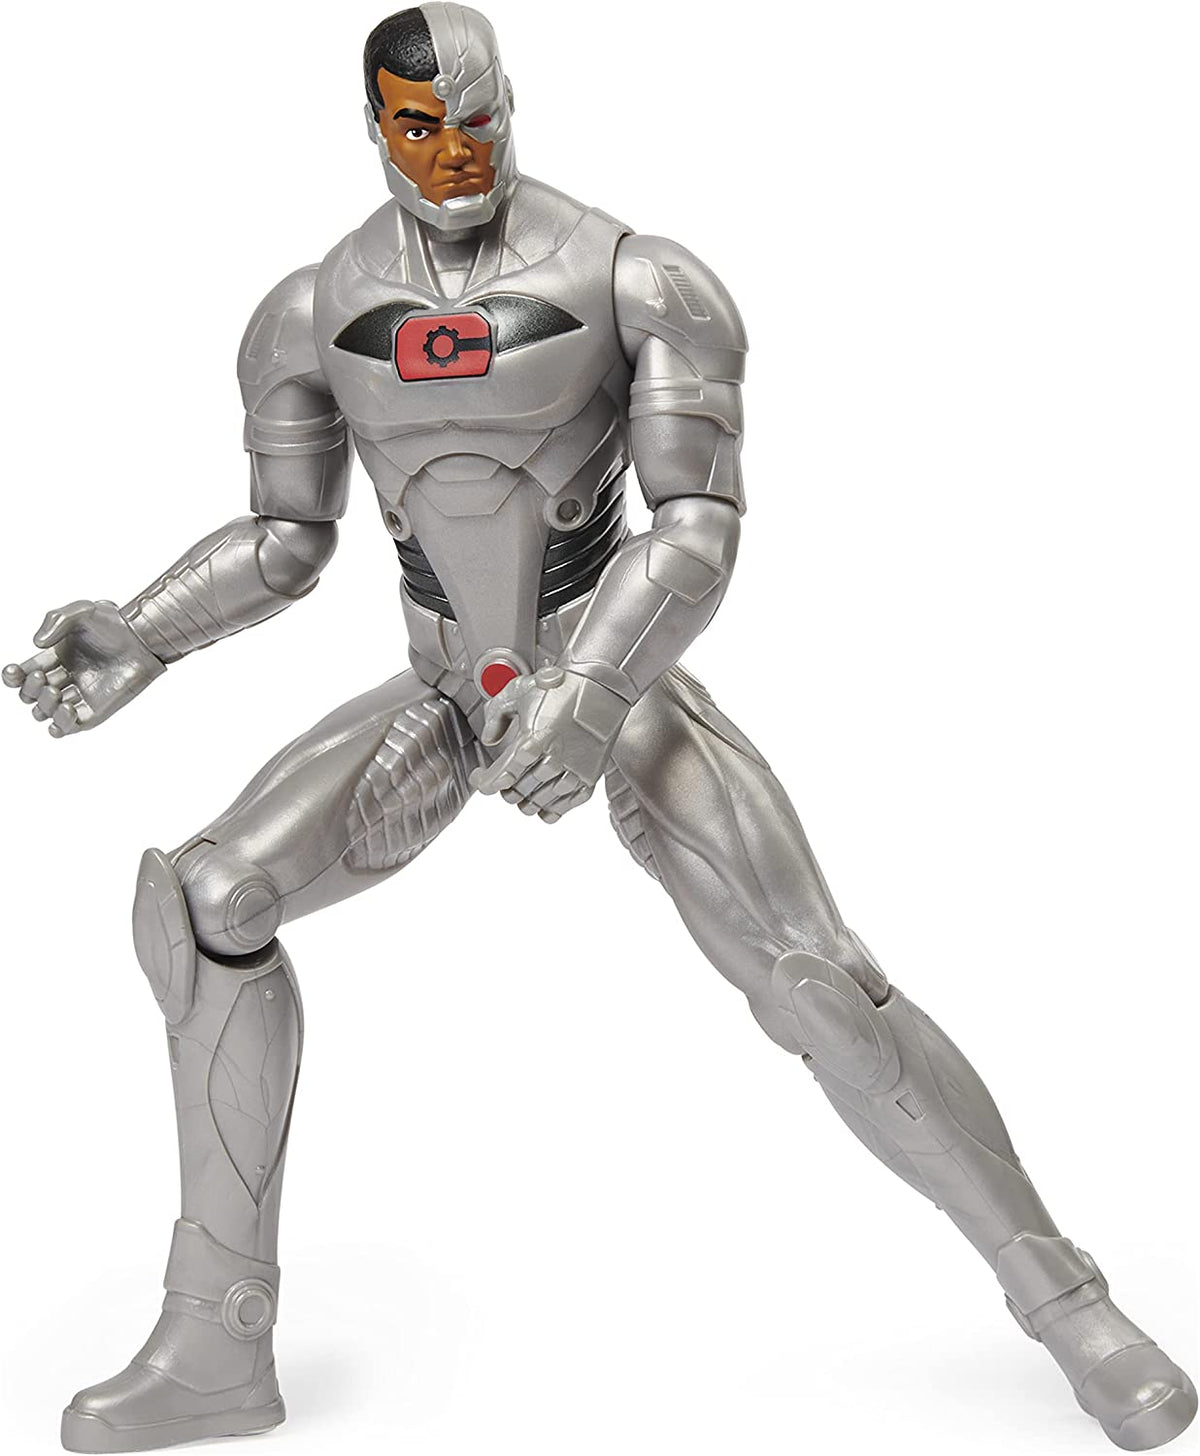 DC Comics 12-inch Cyborg Action Figure